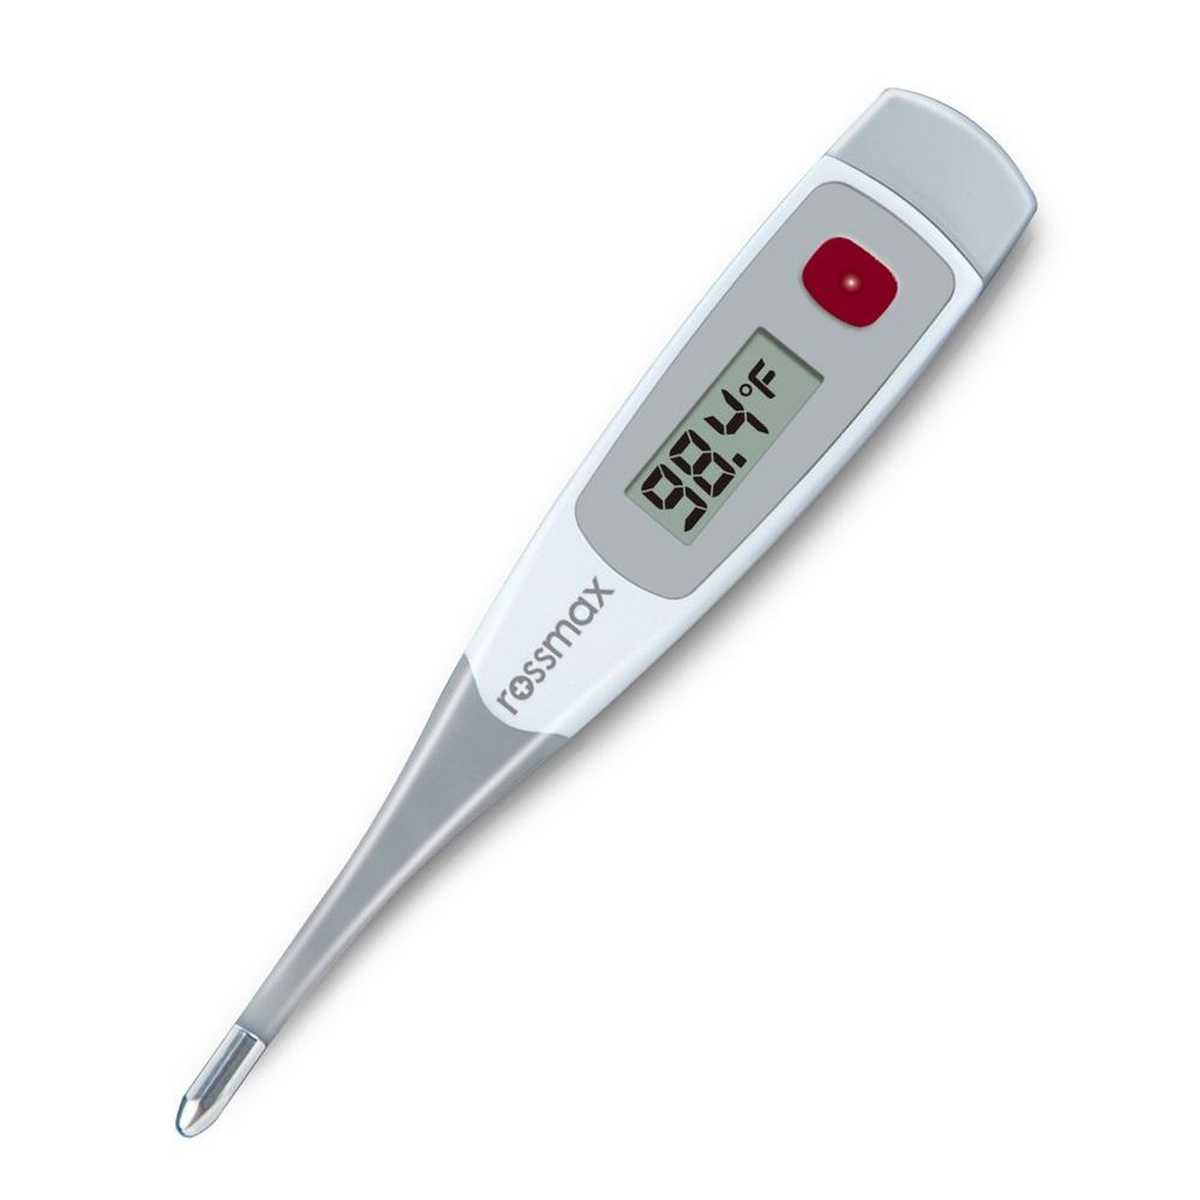 Dynarex 7095 Digital Blood Pressure Monitor - Wrist